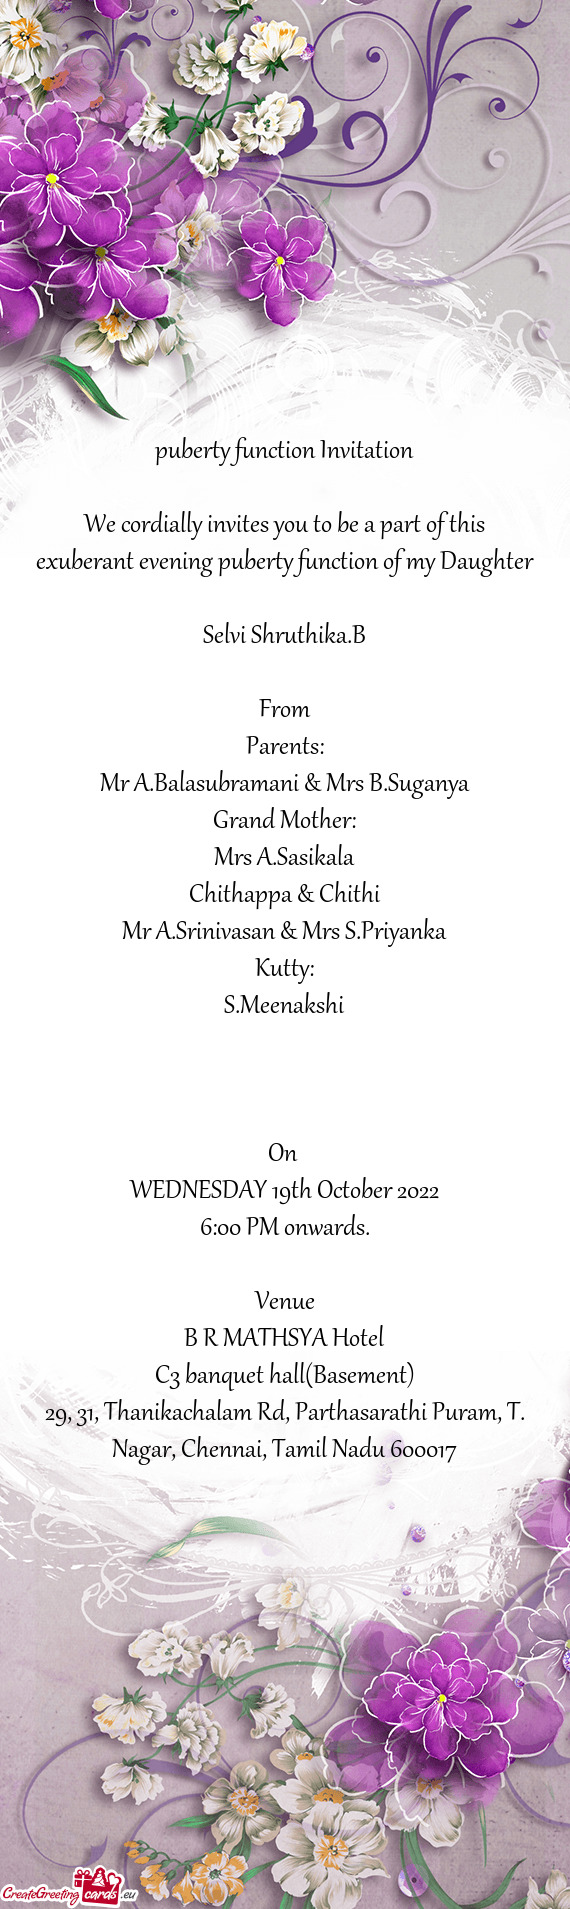 Mr A.Balasubramani & Mrs B.Suganya